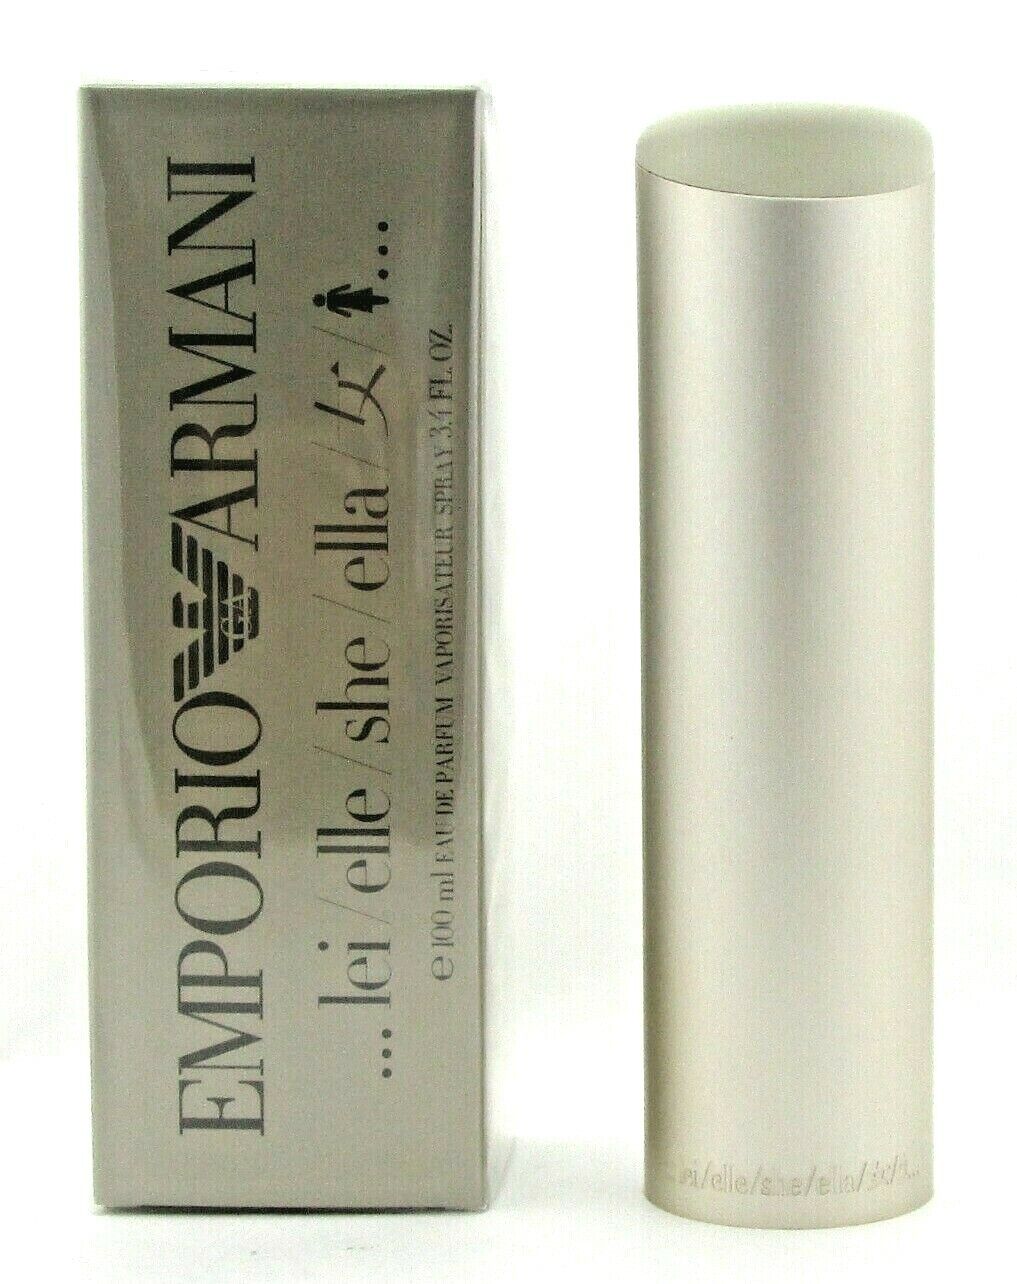 Emporio Armani SHE by Giorgio Armani 3.4 oz. EDP Spray for Women. New Sealed Box Emporio Armani